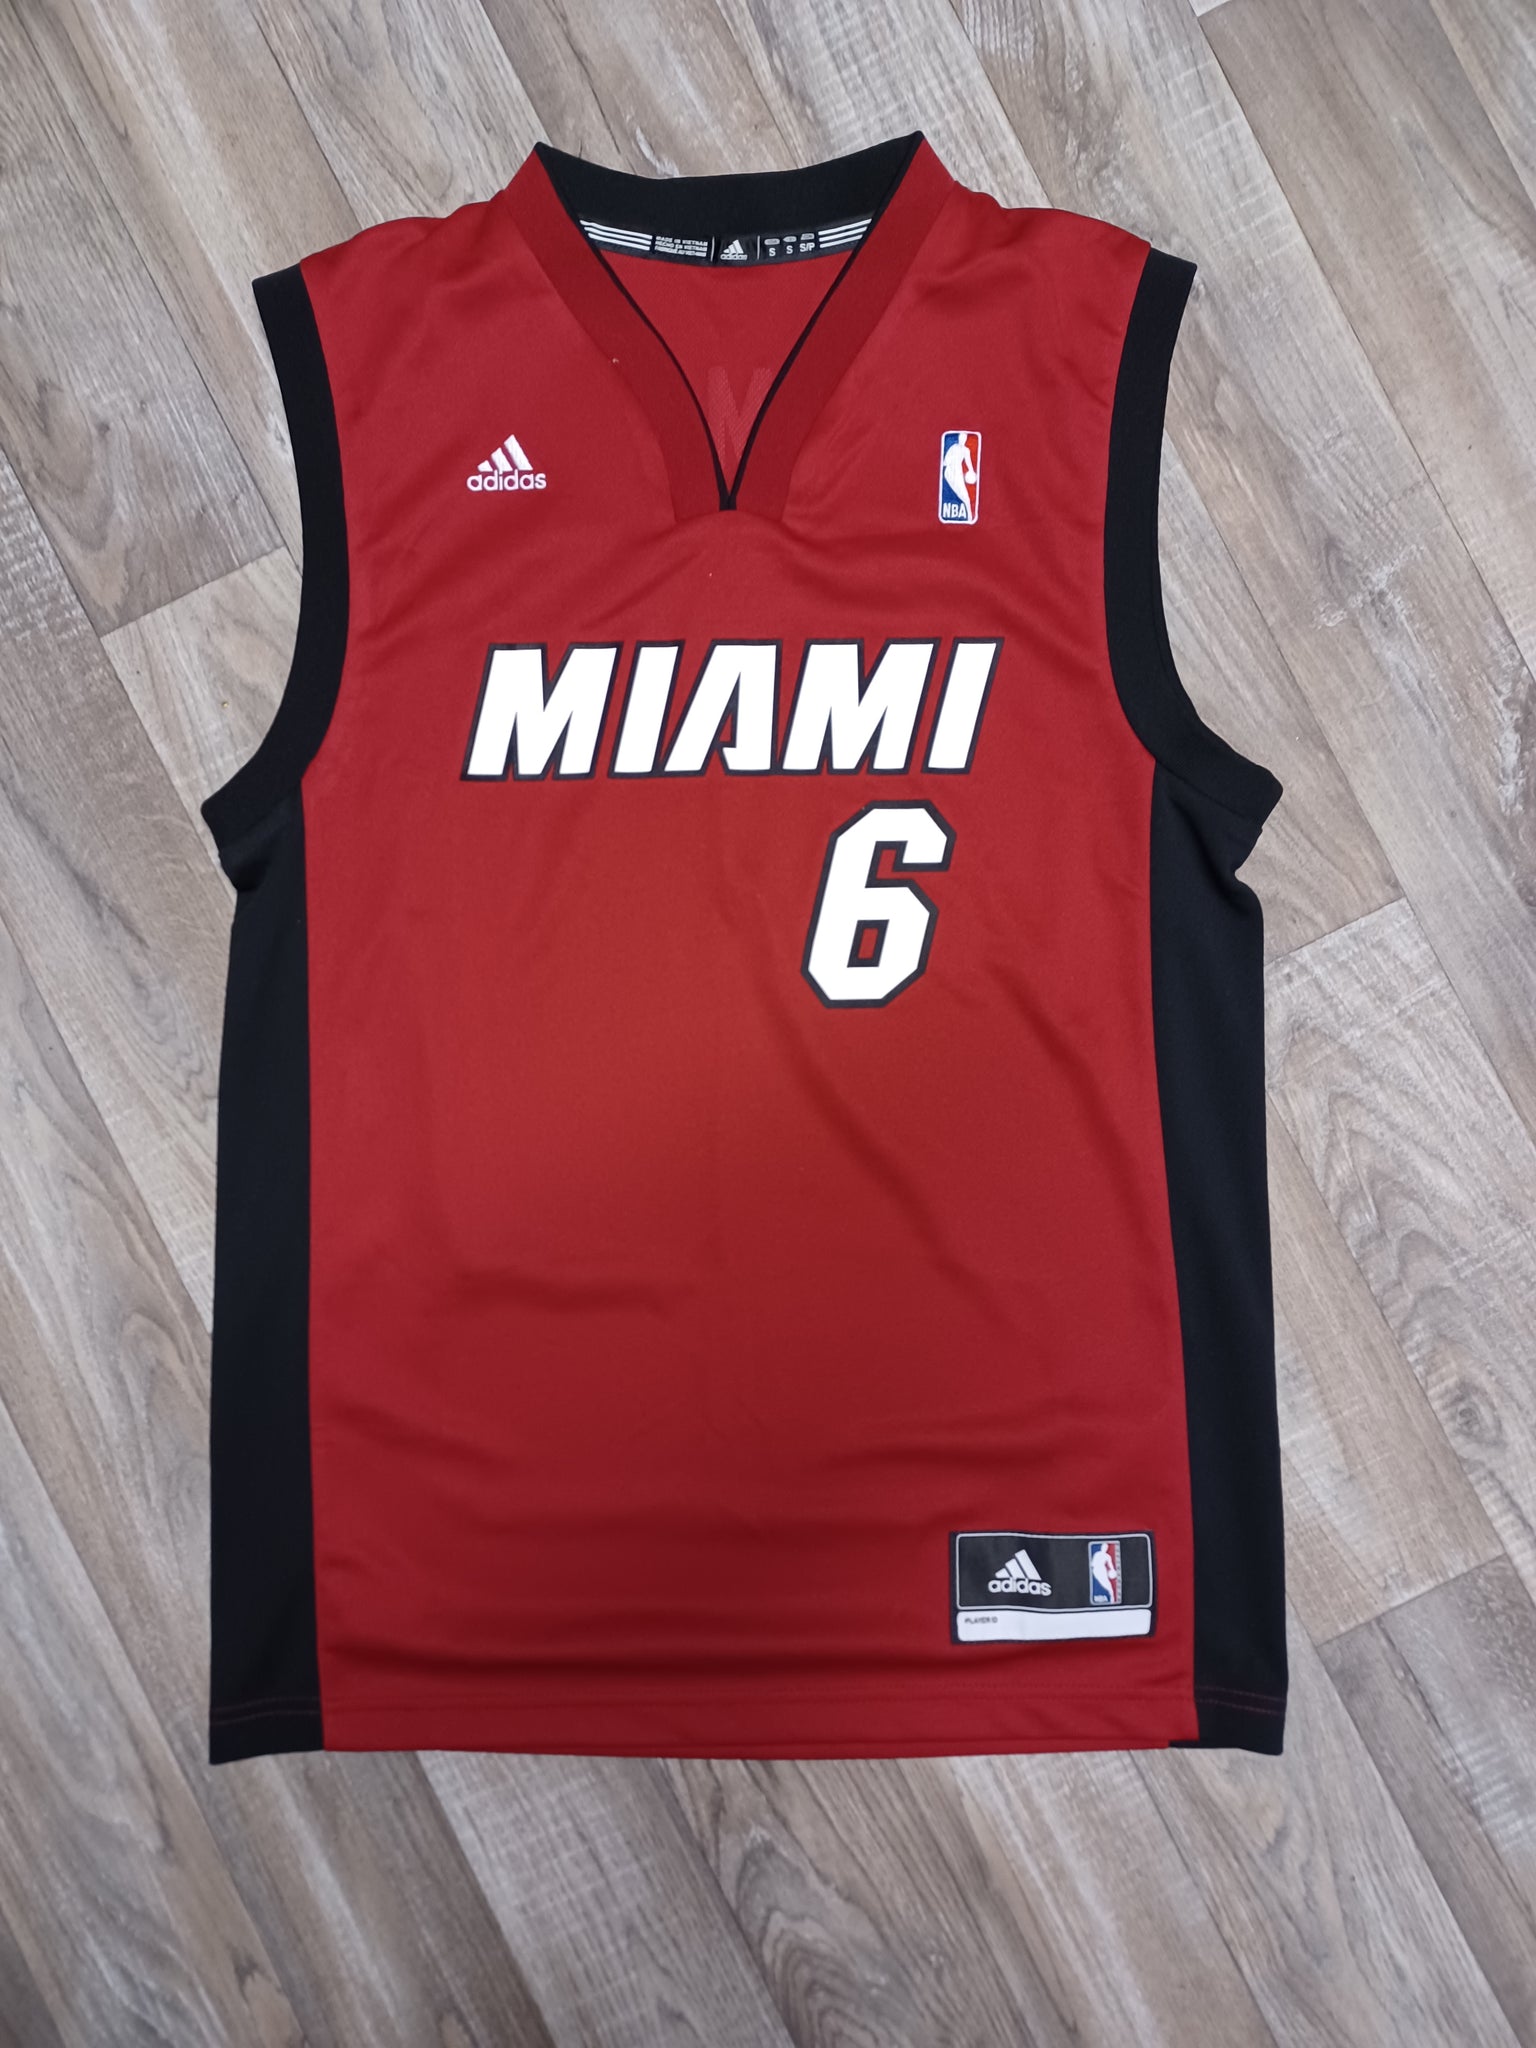 NEW 2013 Miami Heat NBA Finals Champions Shirt Size 2XL Lebron James Wade  Big 3